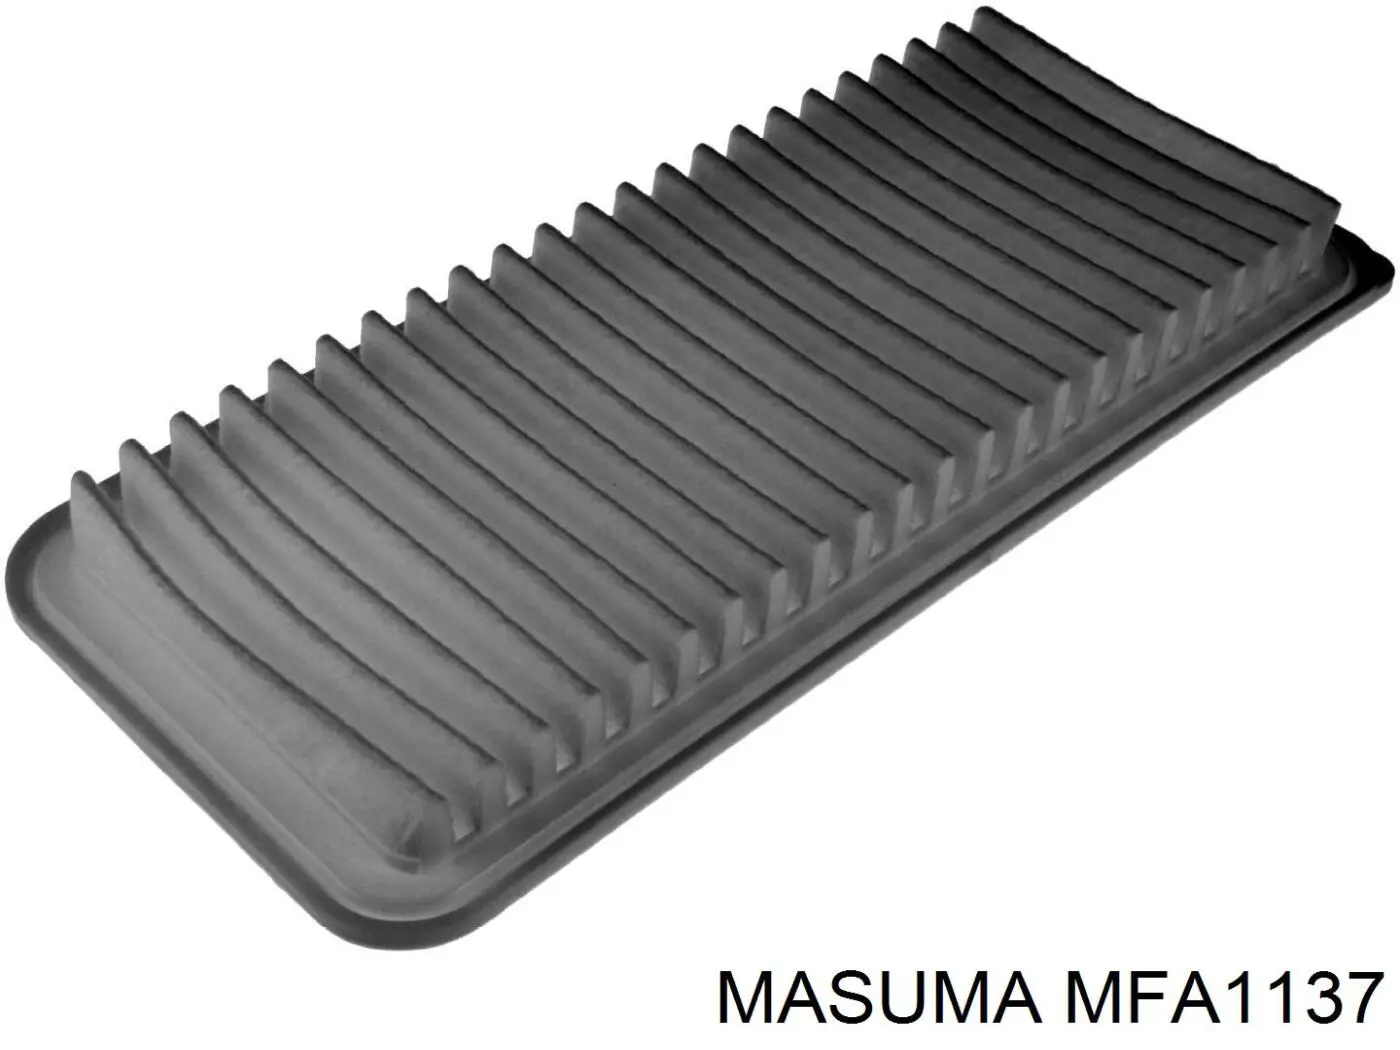 MFA1137 Masuma filtro de ar